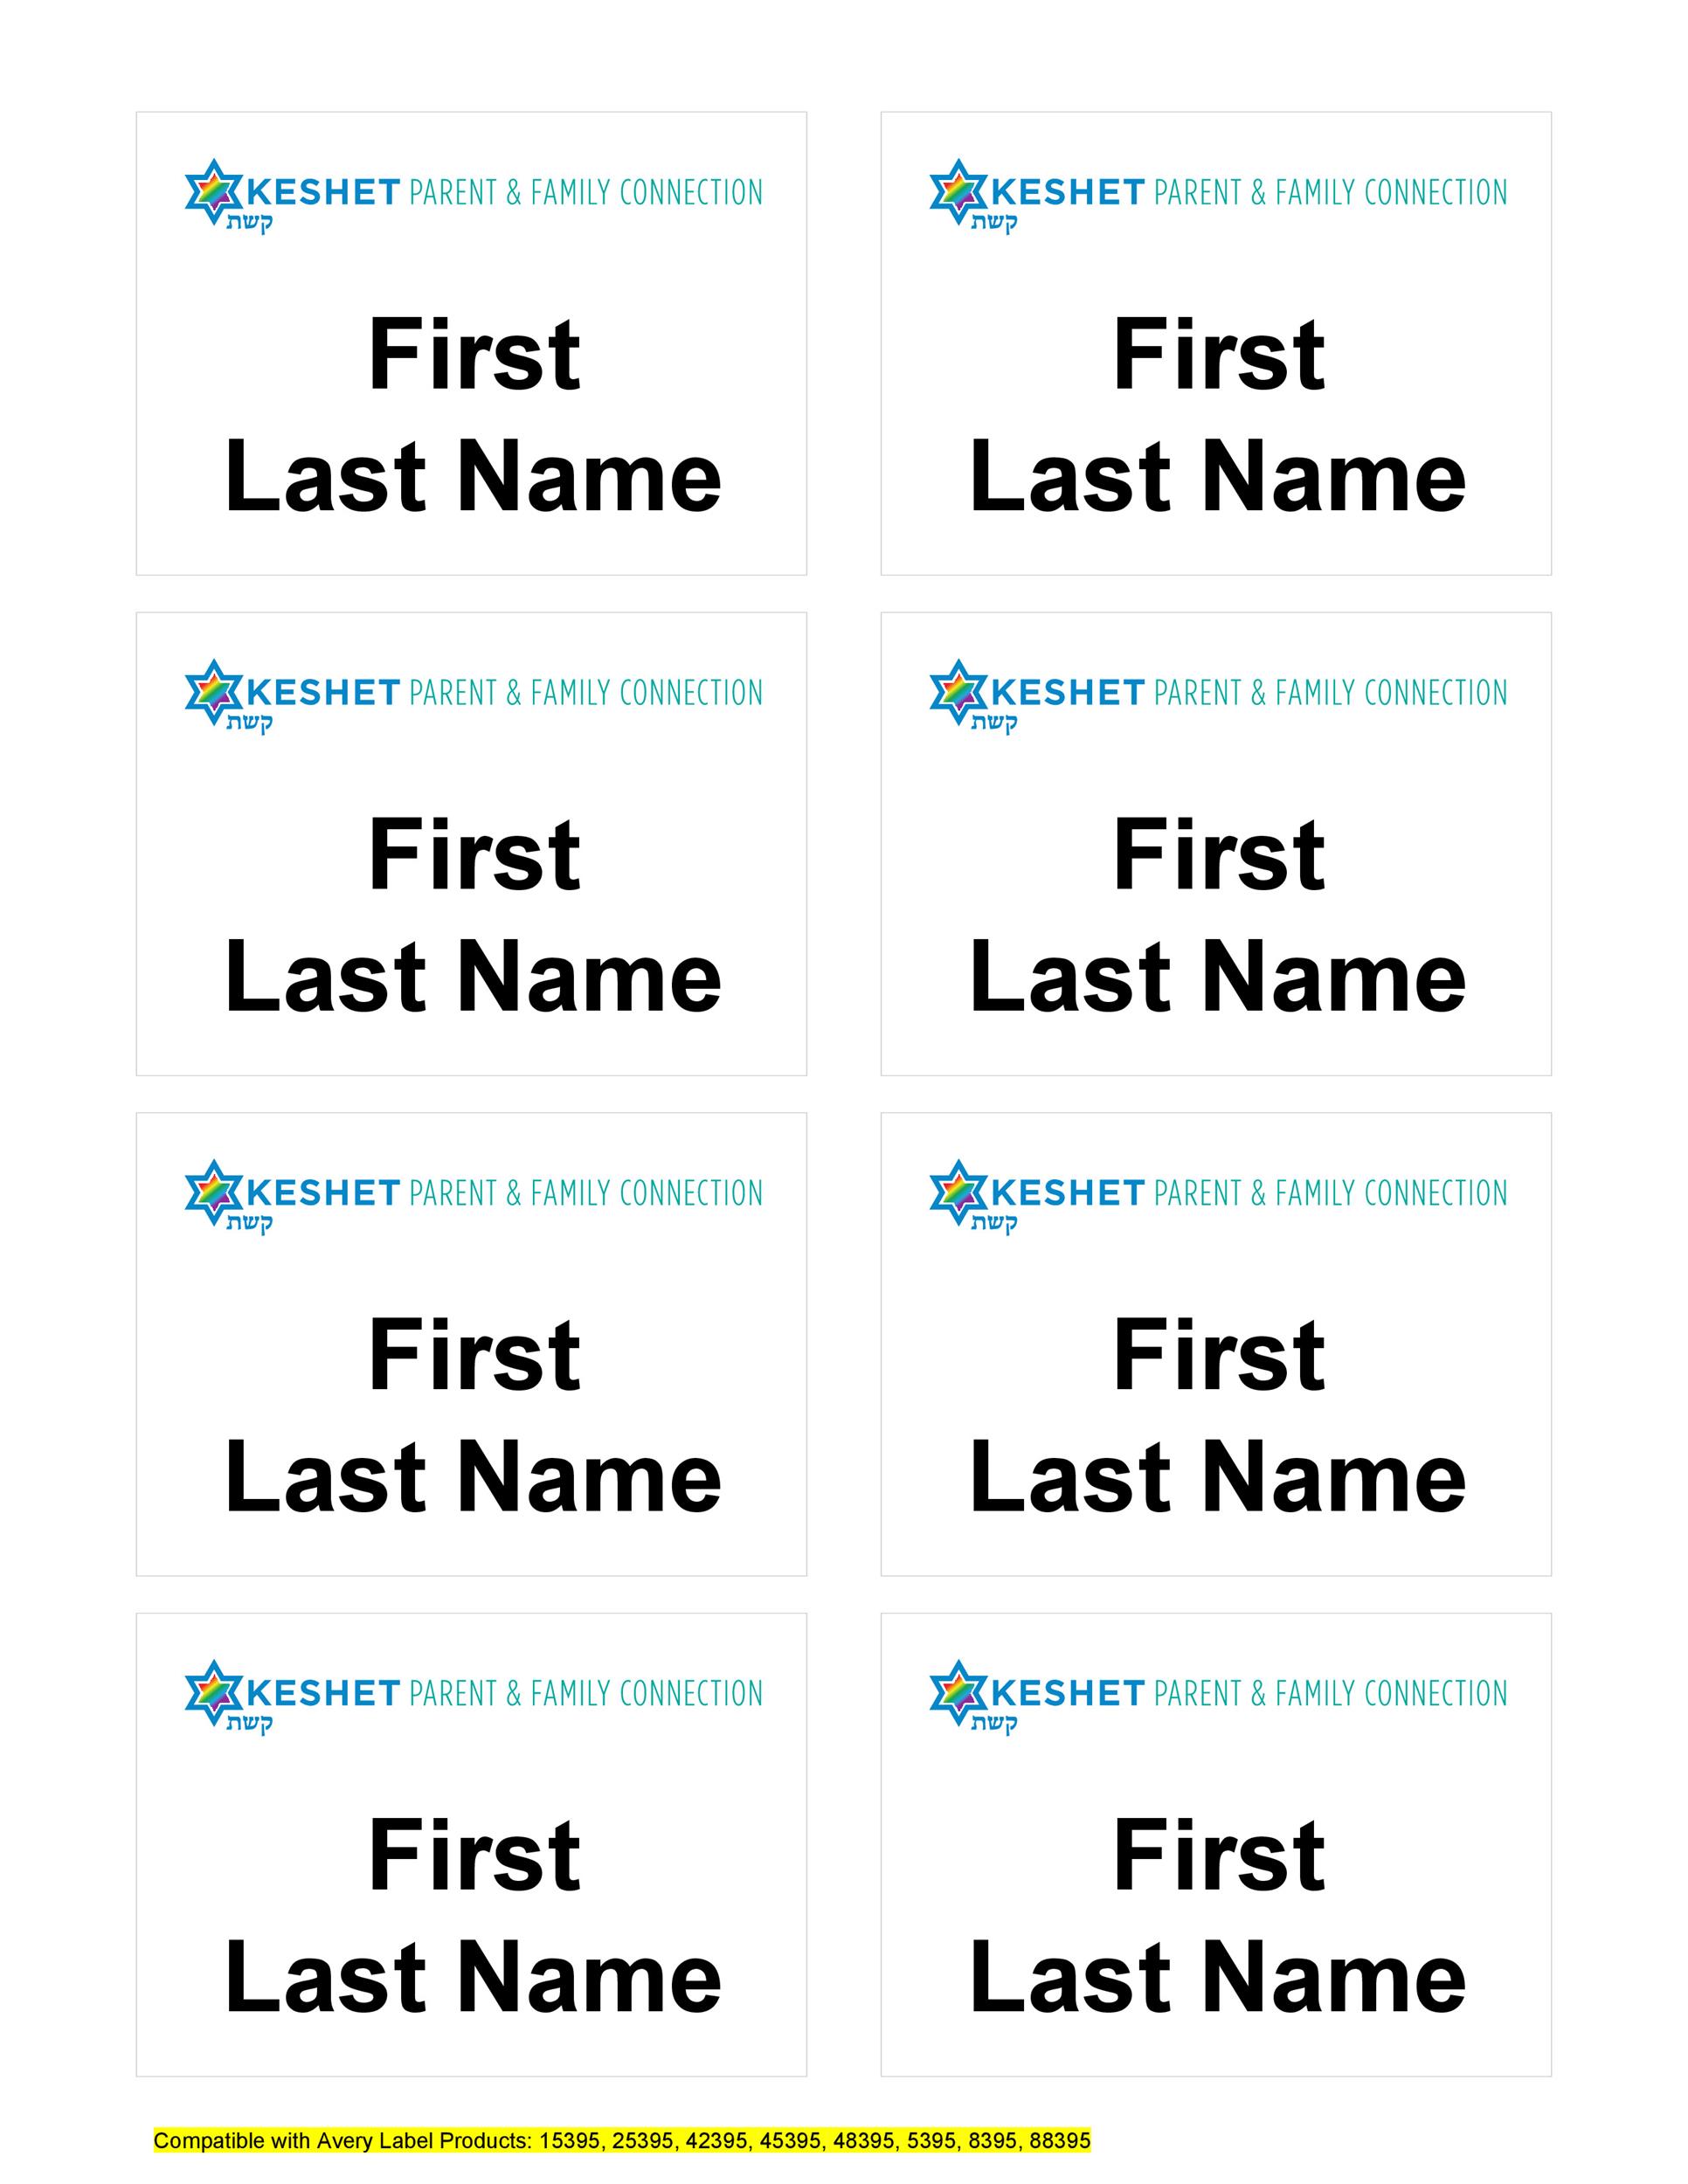 47 Free Name Tag + Badge Templates ᐅ TemplateLab